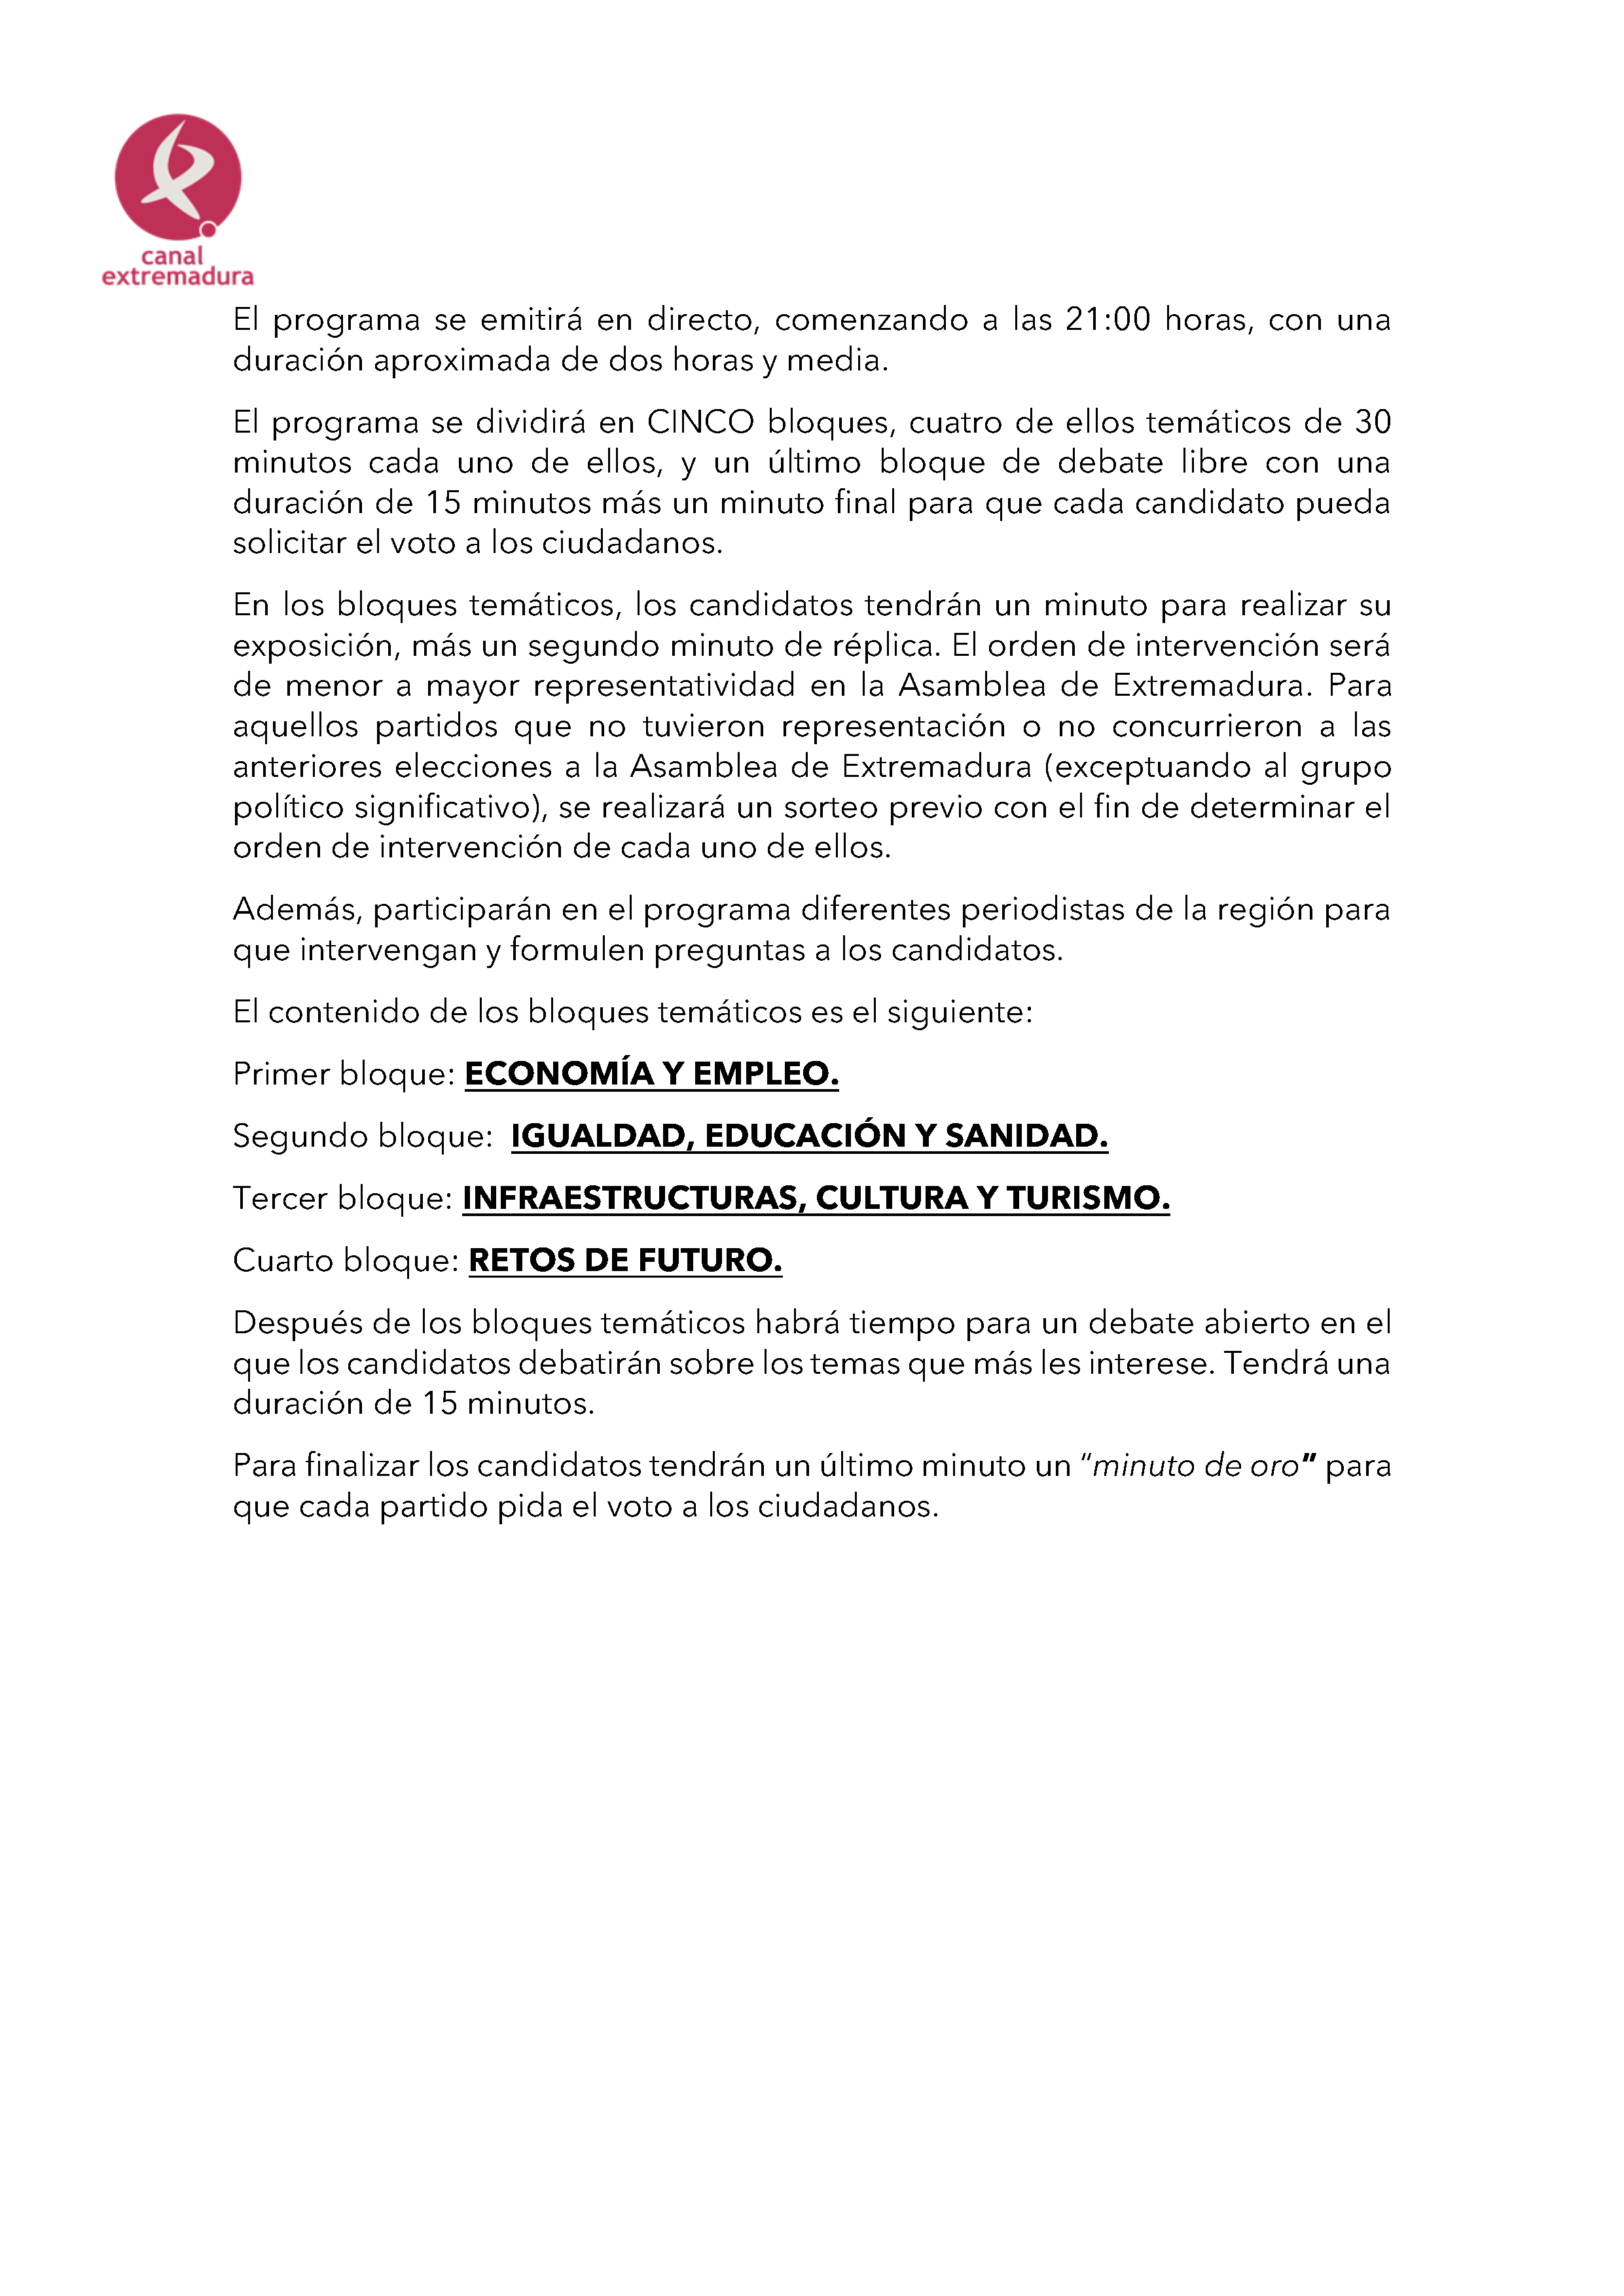 PLAN DE COBERTURA INFORMATIVA DE CANAL EXTREMADURA Pag 8